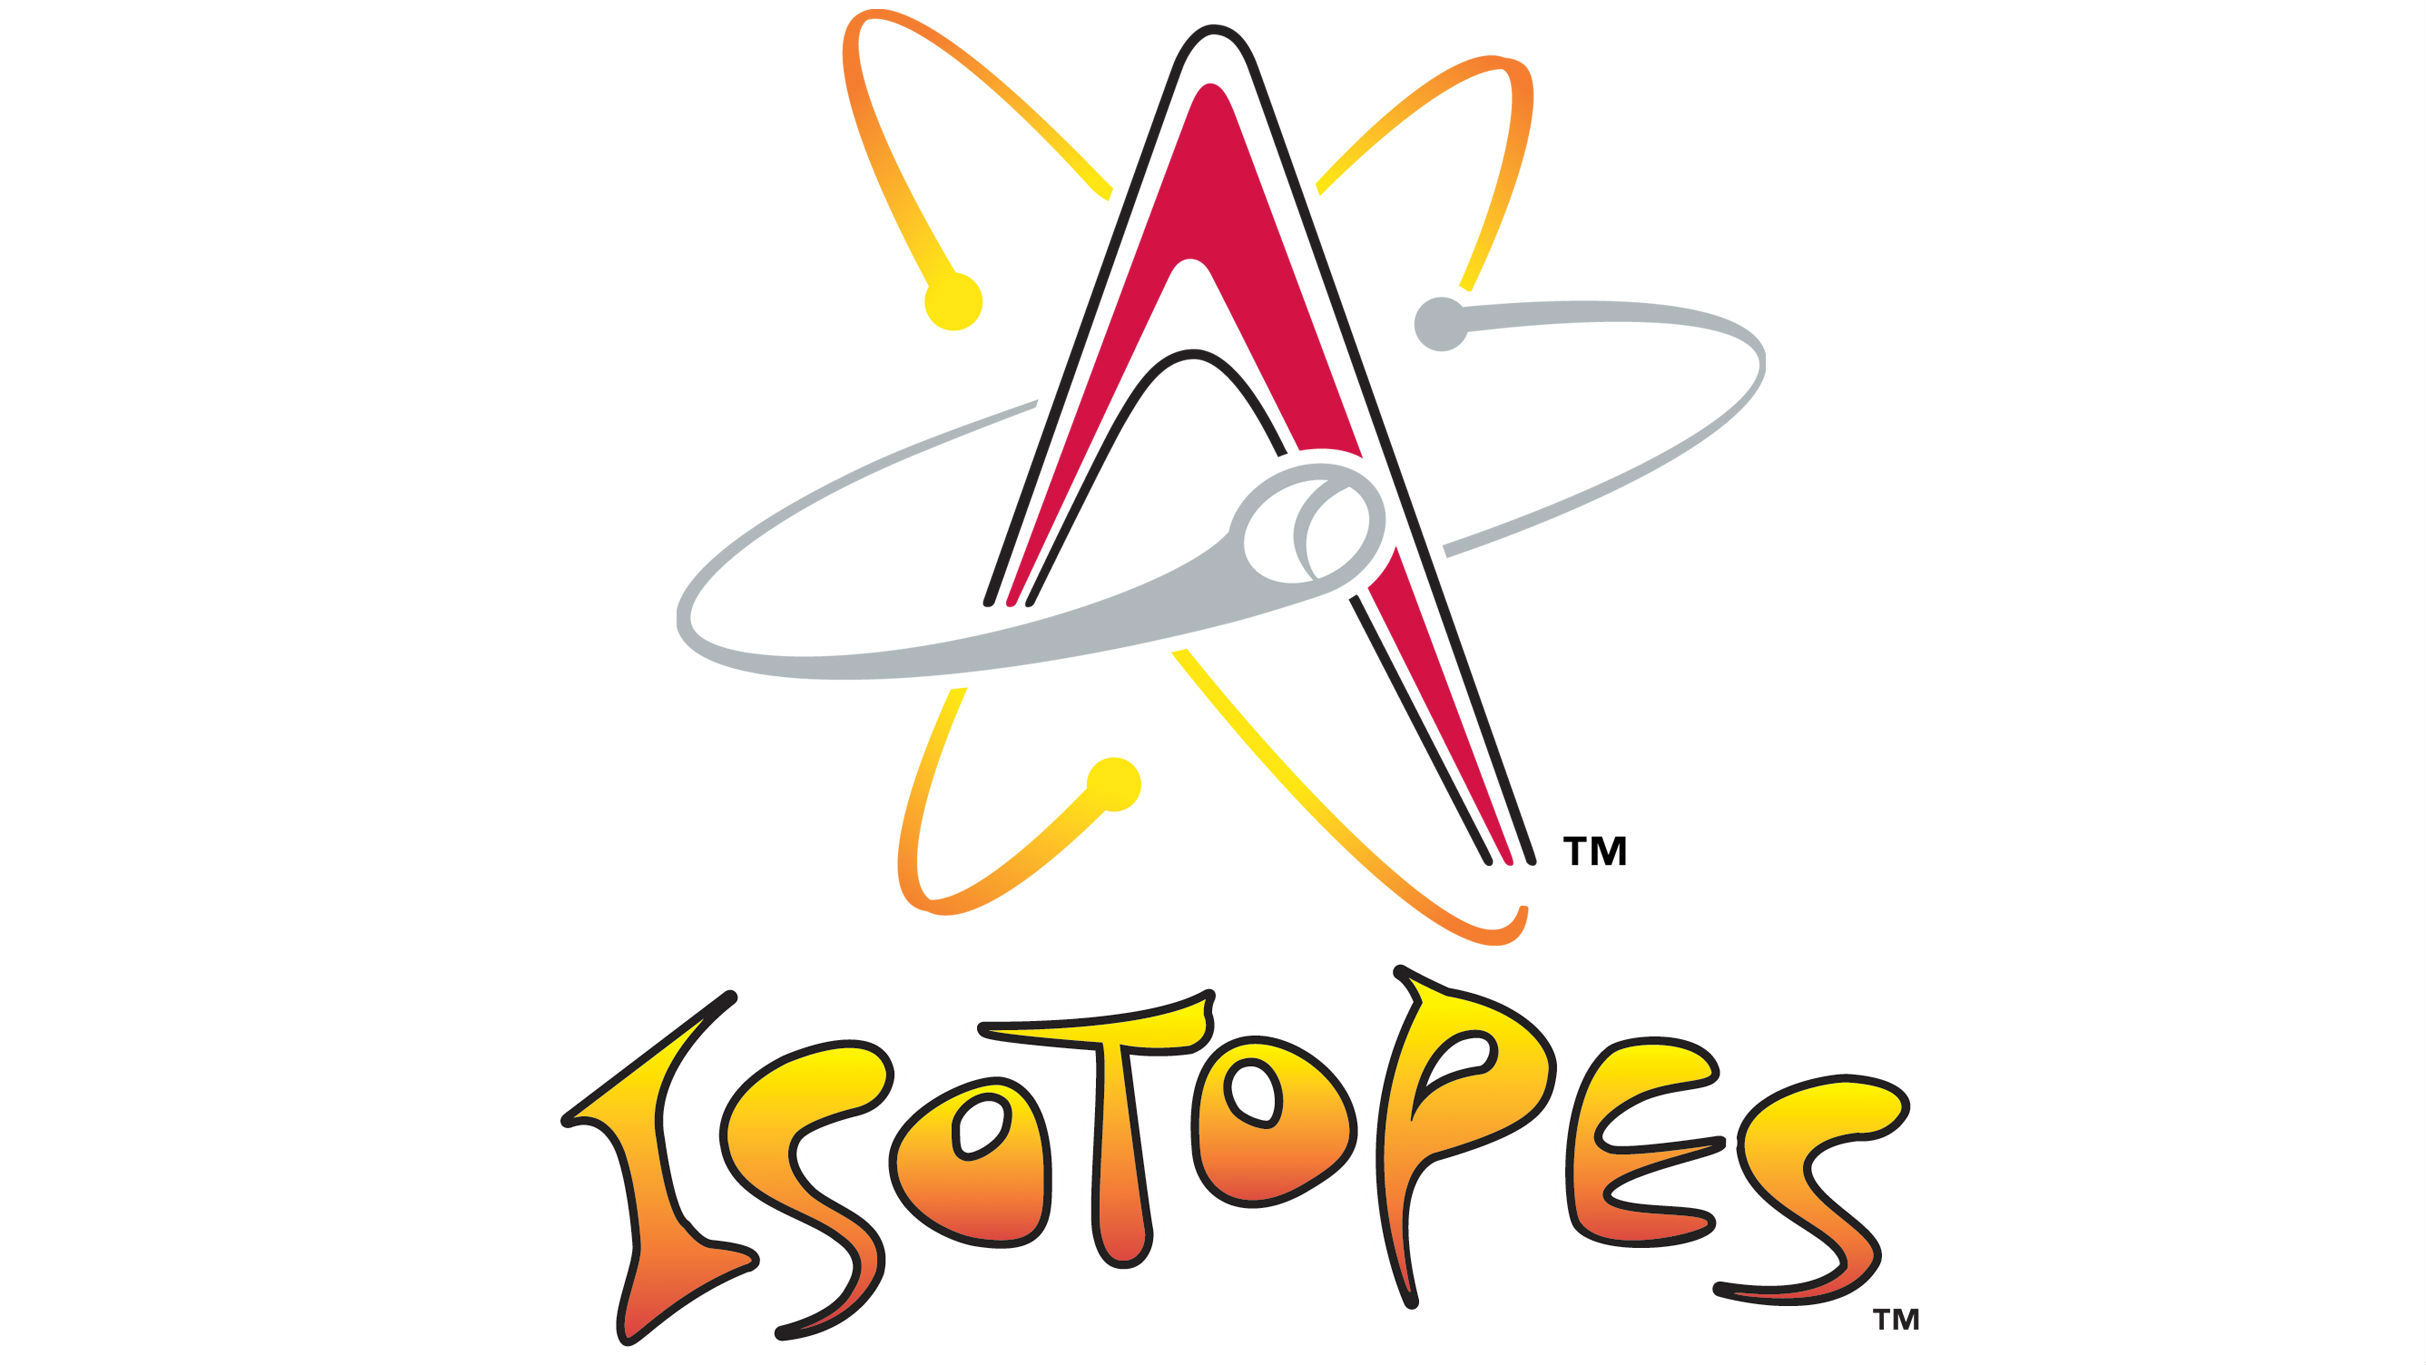 Albuquerque Isotopes vs. Salt Lake Bees